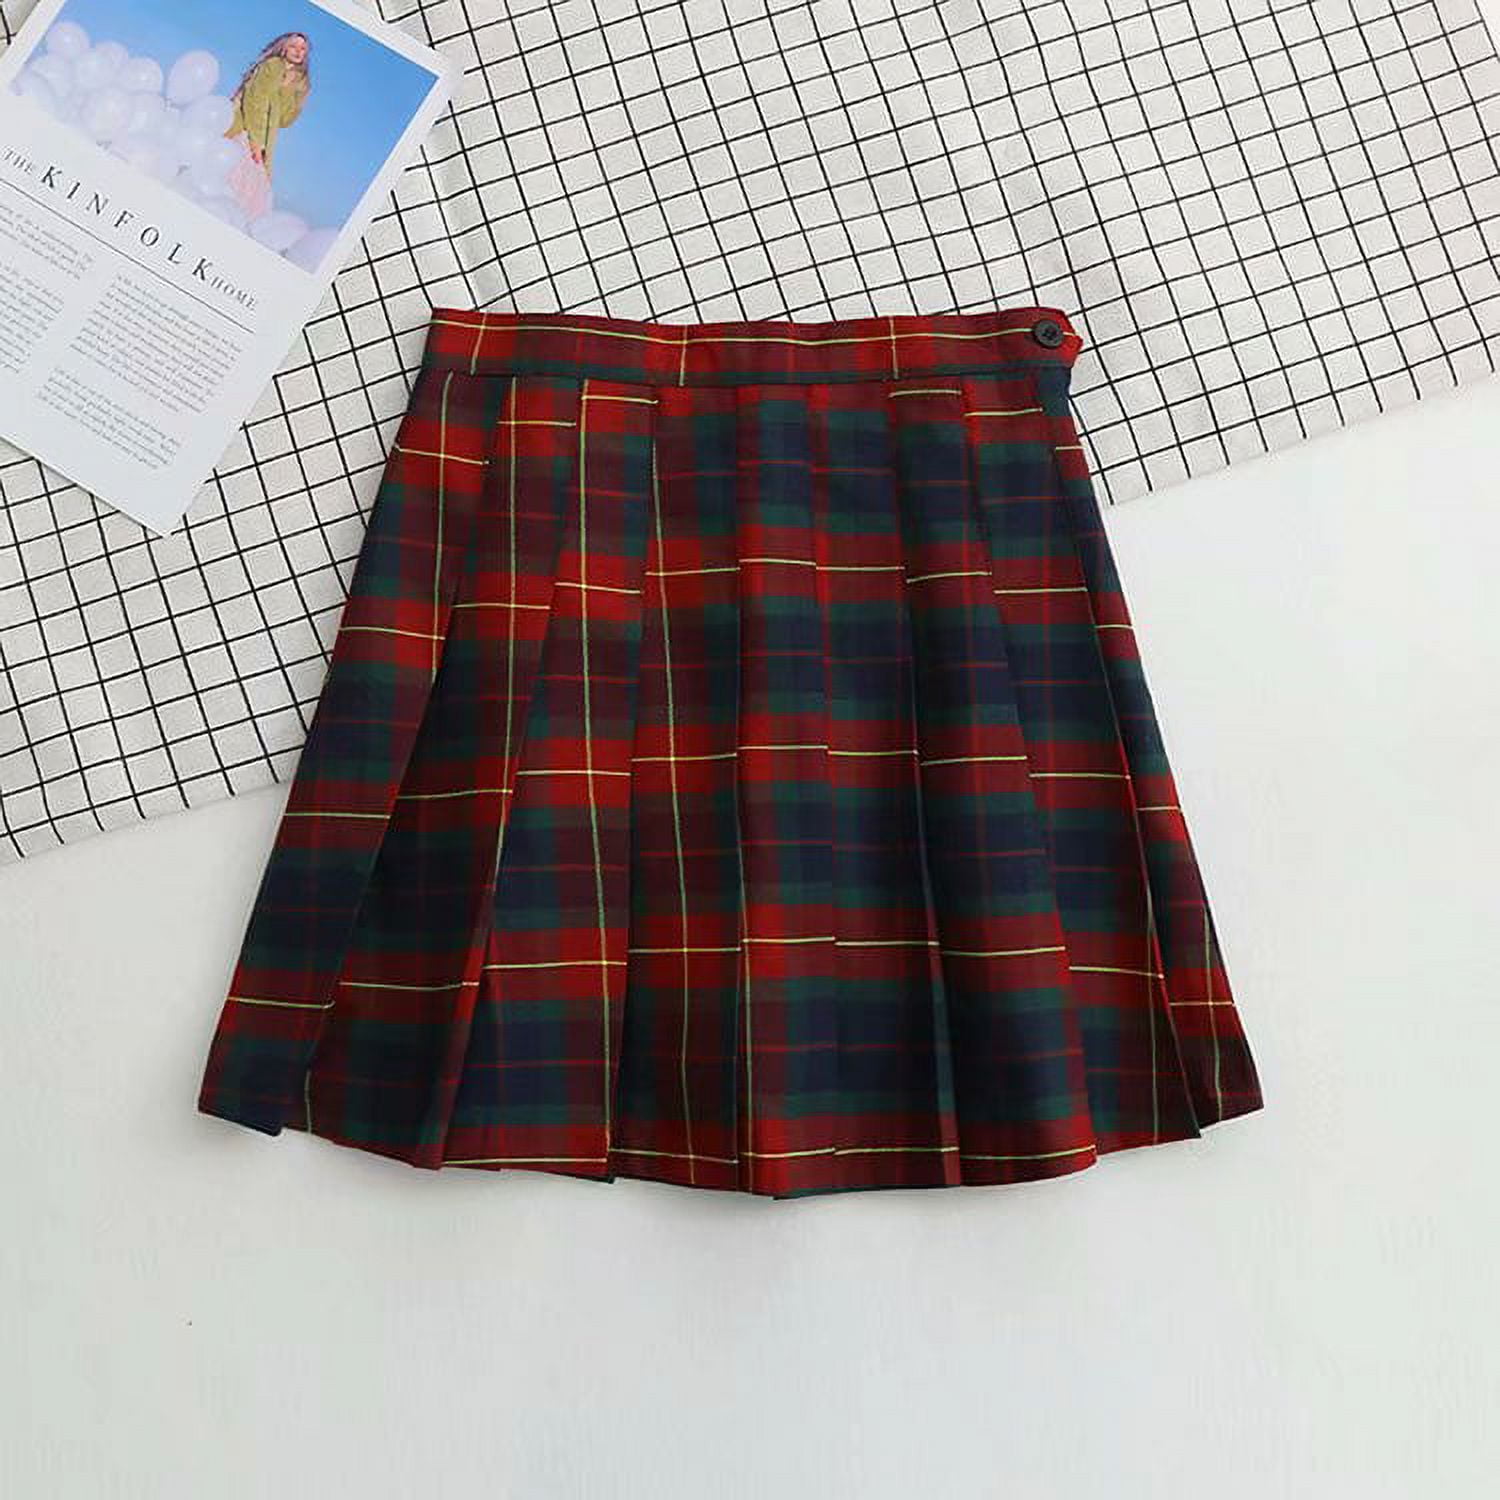 Shimai Womens Plaid Pleated Mini Tartan Plaid Skirt Outfit High Waist A  Line Suspender Flare Short Plaid Skirt Outfits For School Uniforms 230303  From Jiao02, $9.51